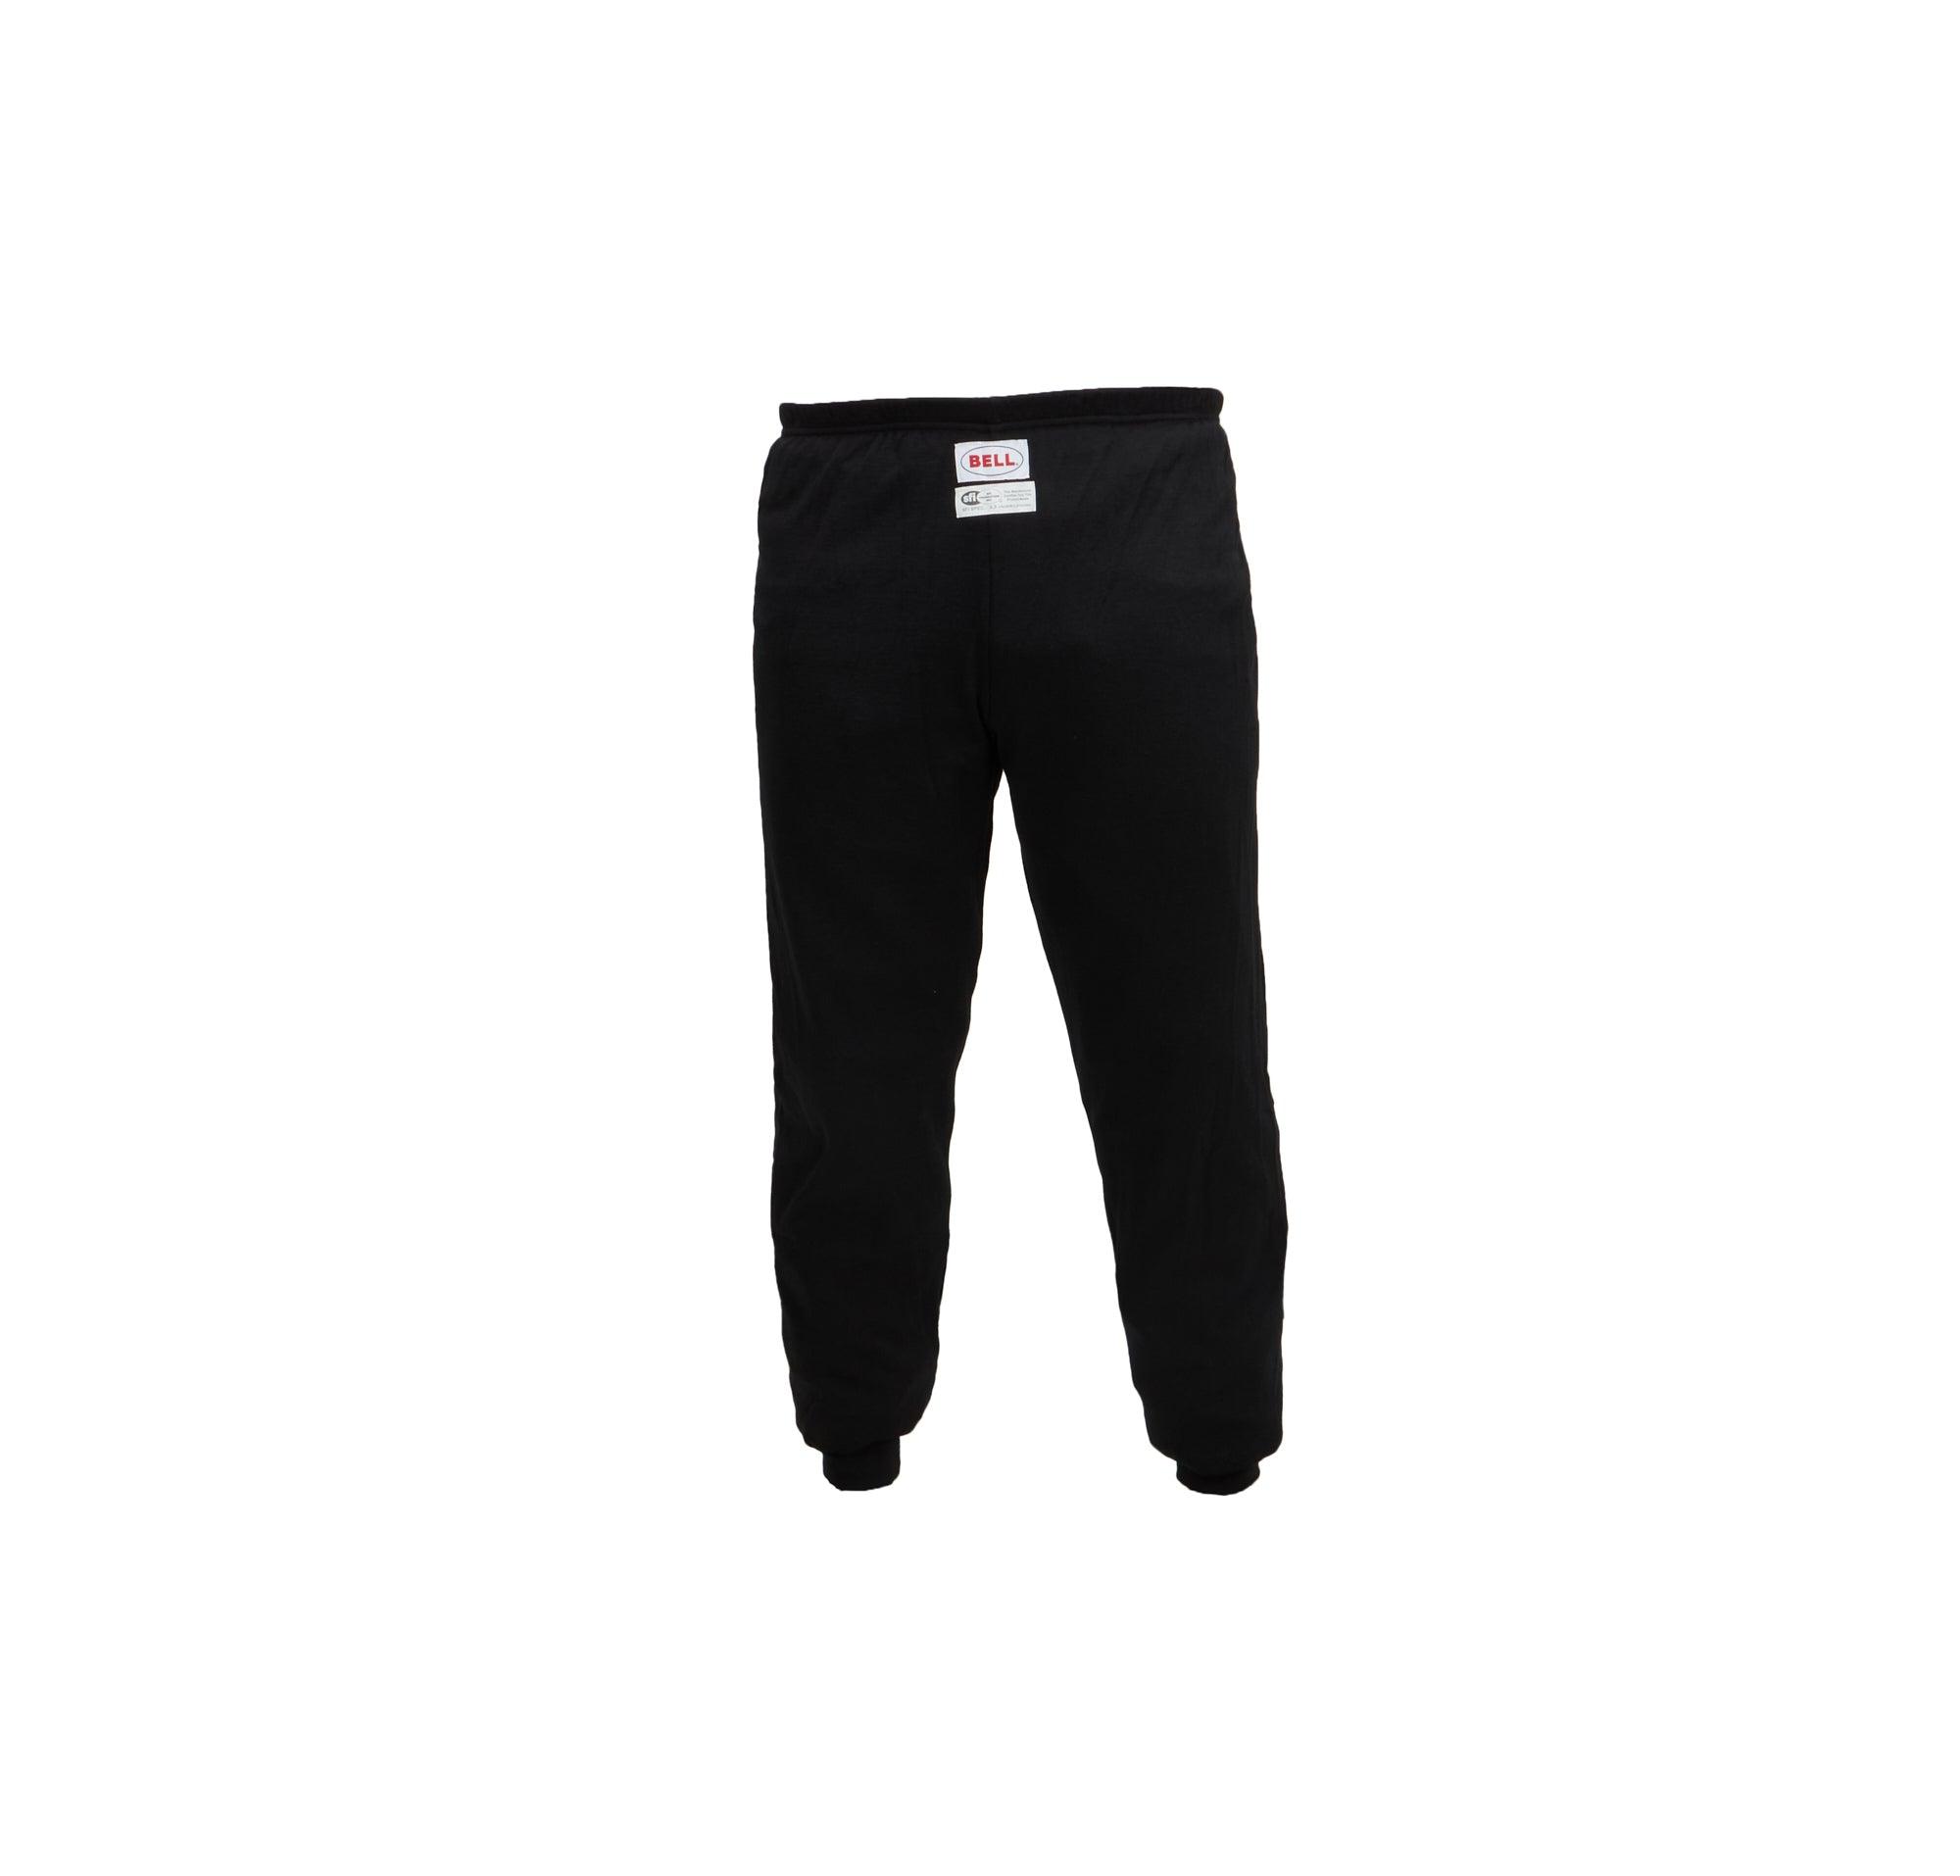 Underwear Bottom SPORT- TX Black XL SFI 3.3/5 - Burlile Performance Products